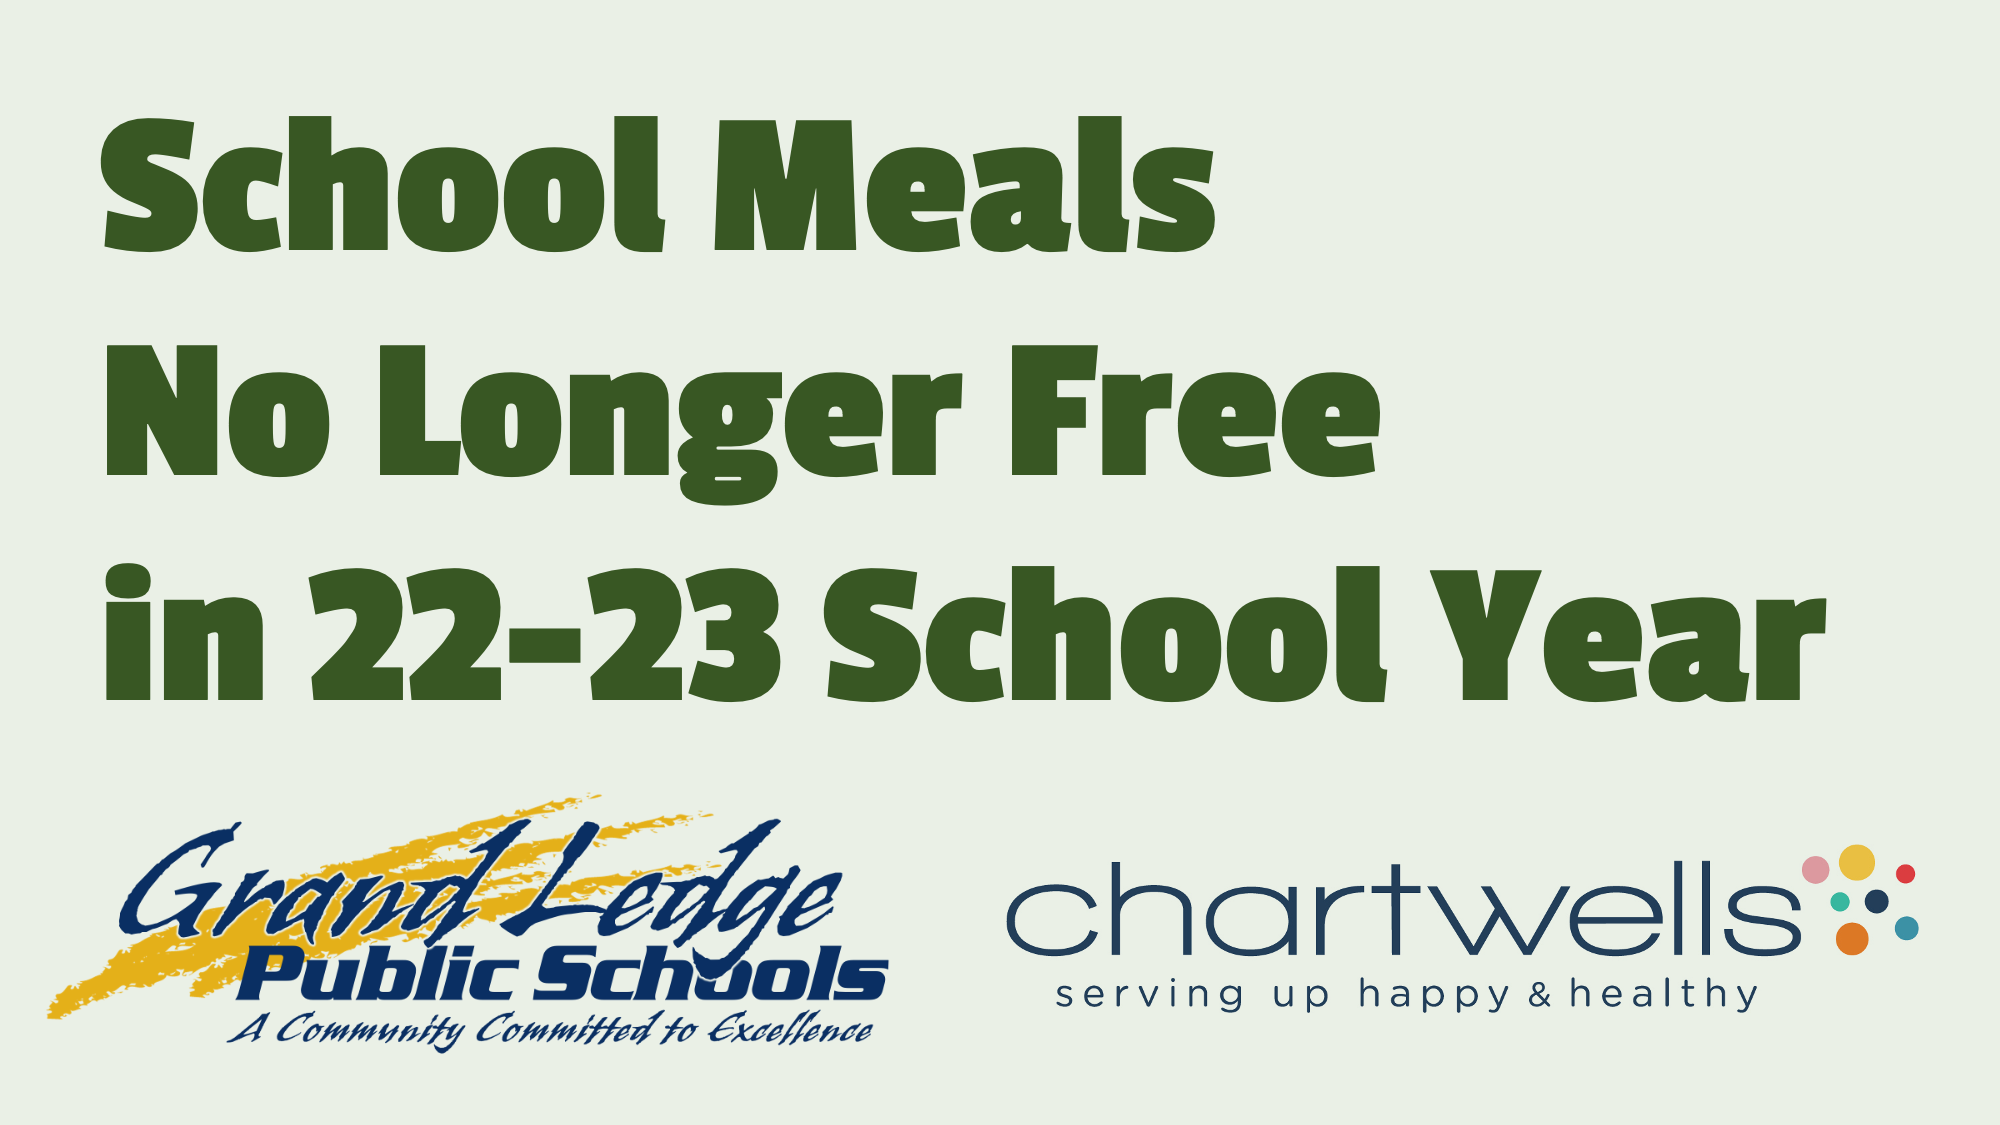 School Meals No Longer Free in 22-23 School Year